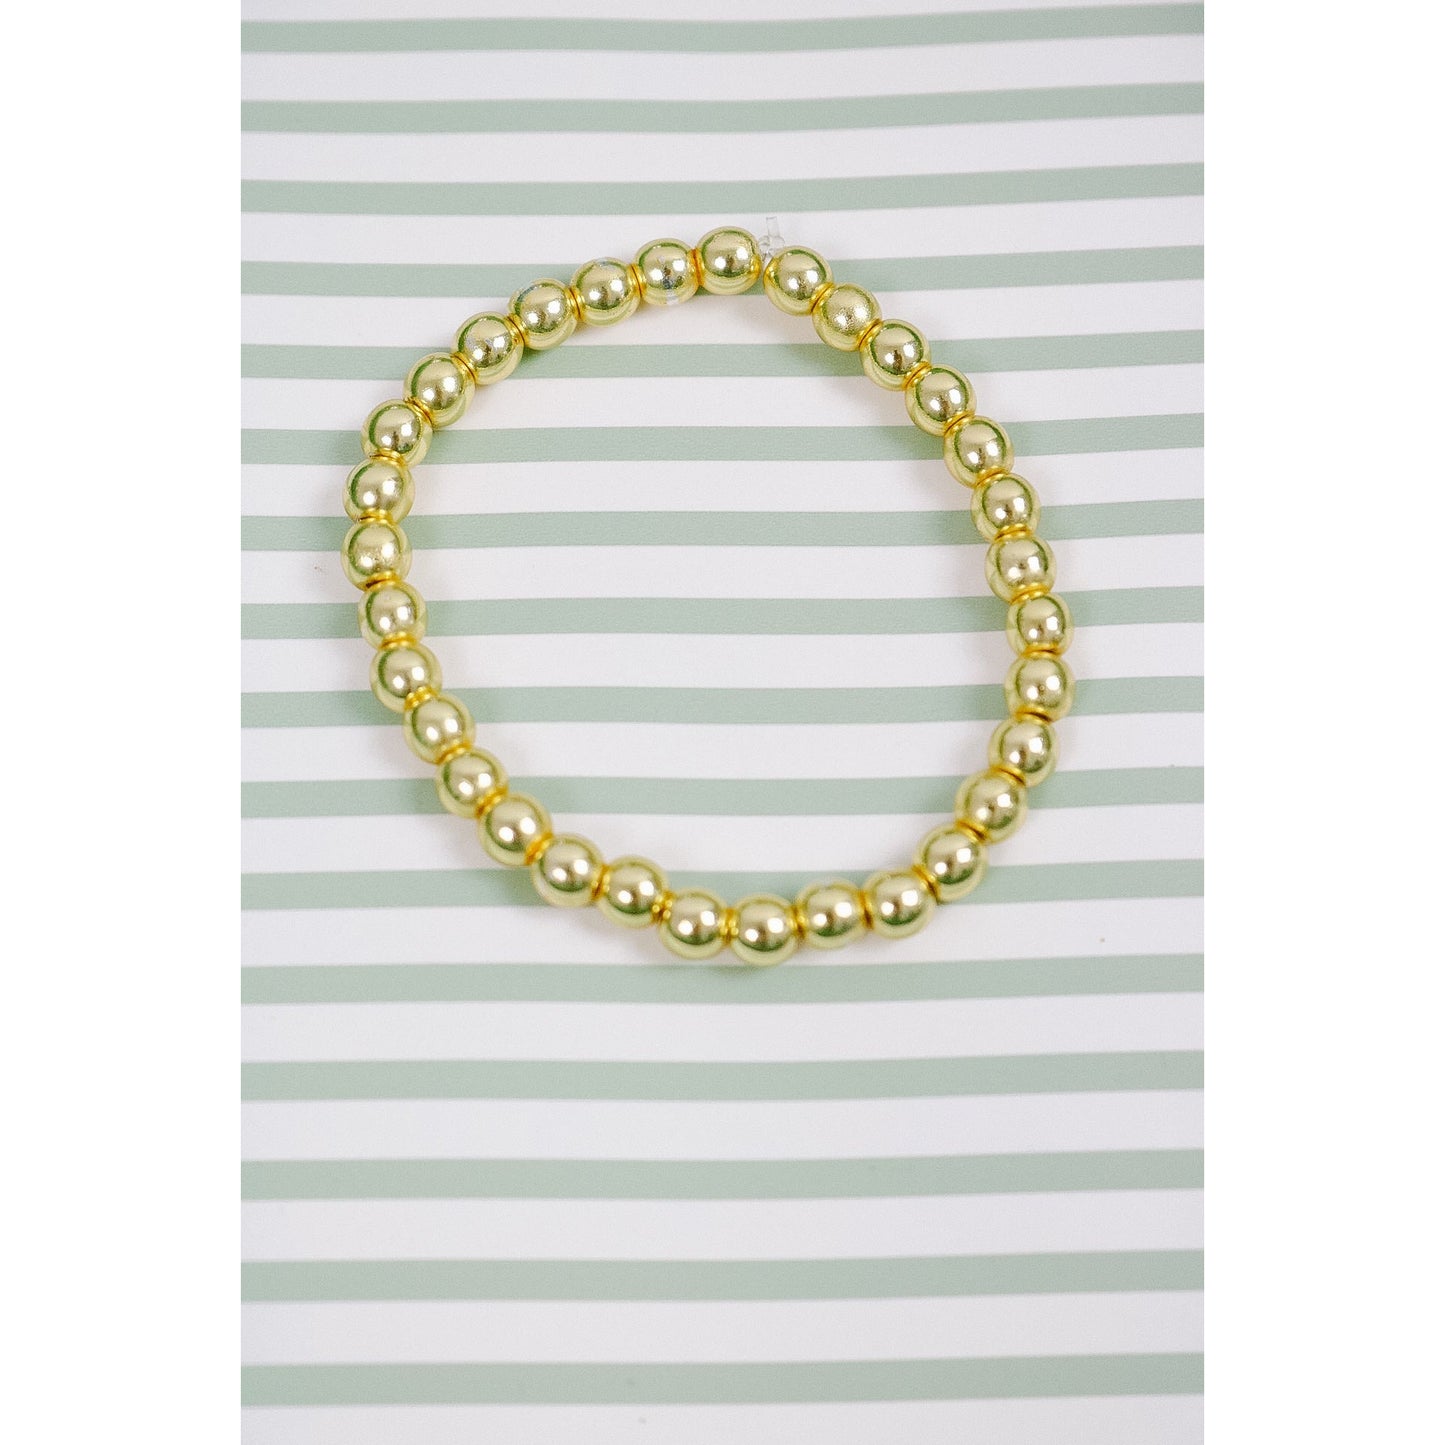 6mm Goldie Bracelet